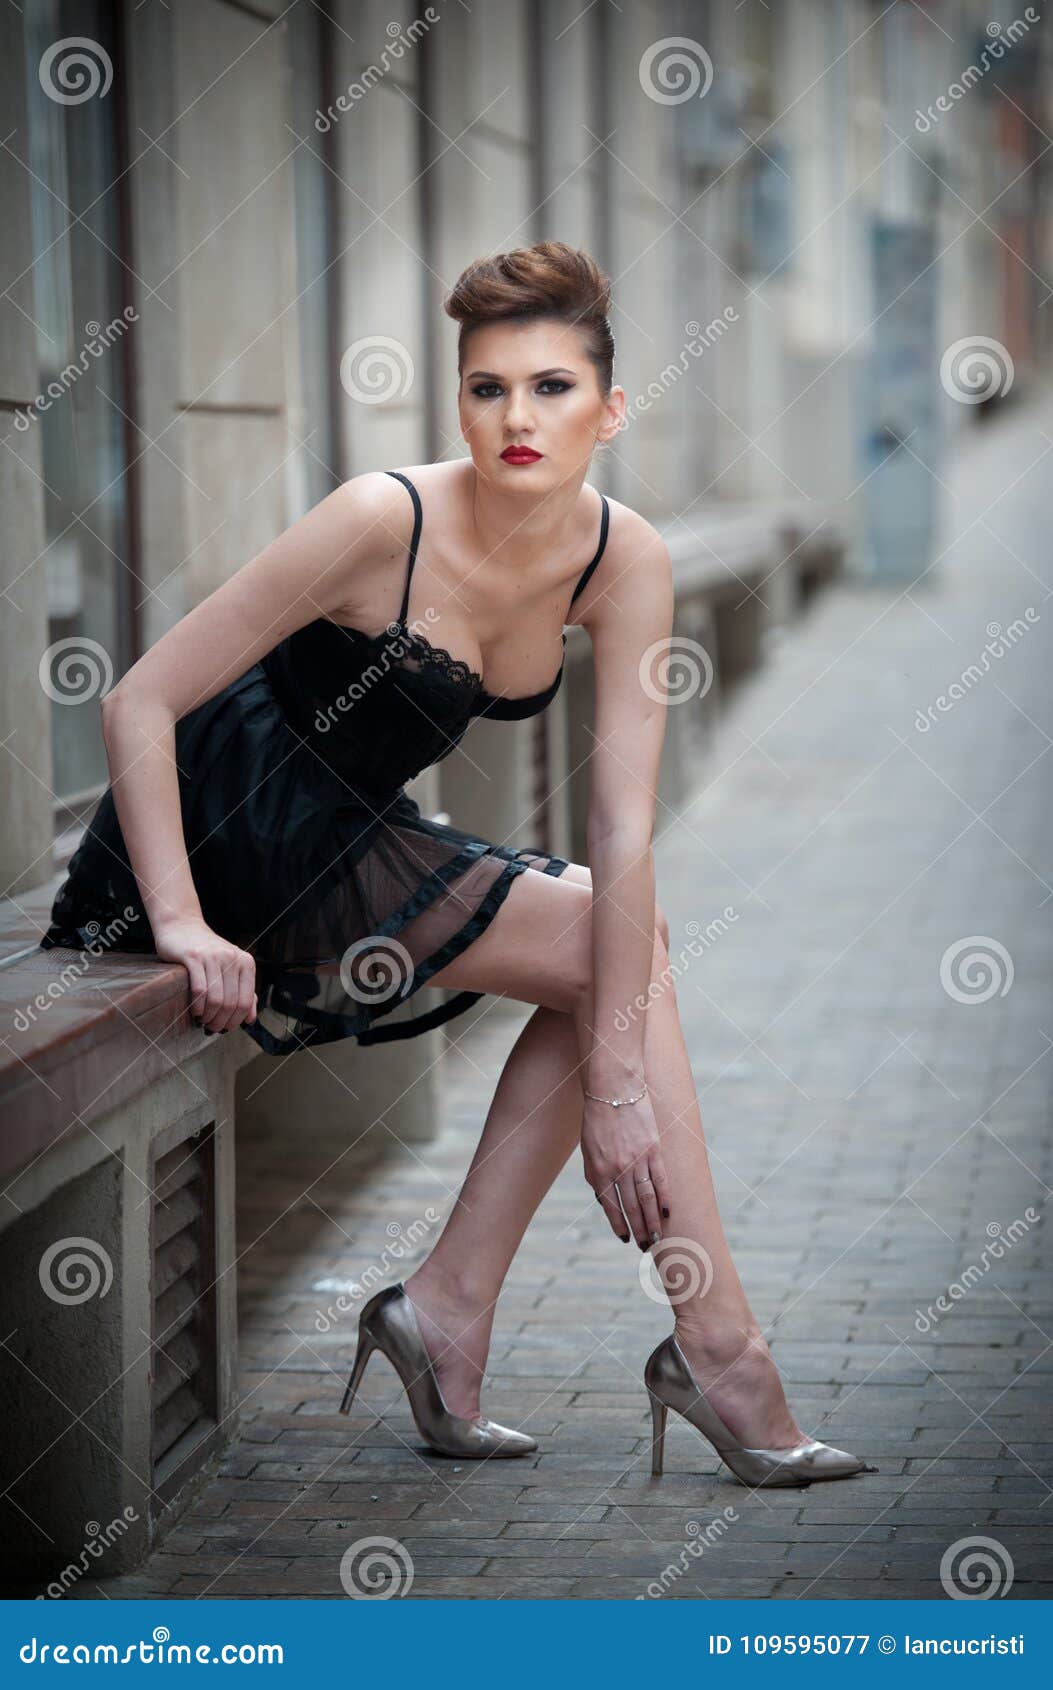 short black dress with high heels